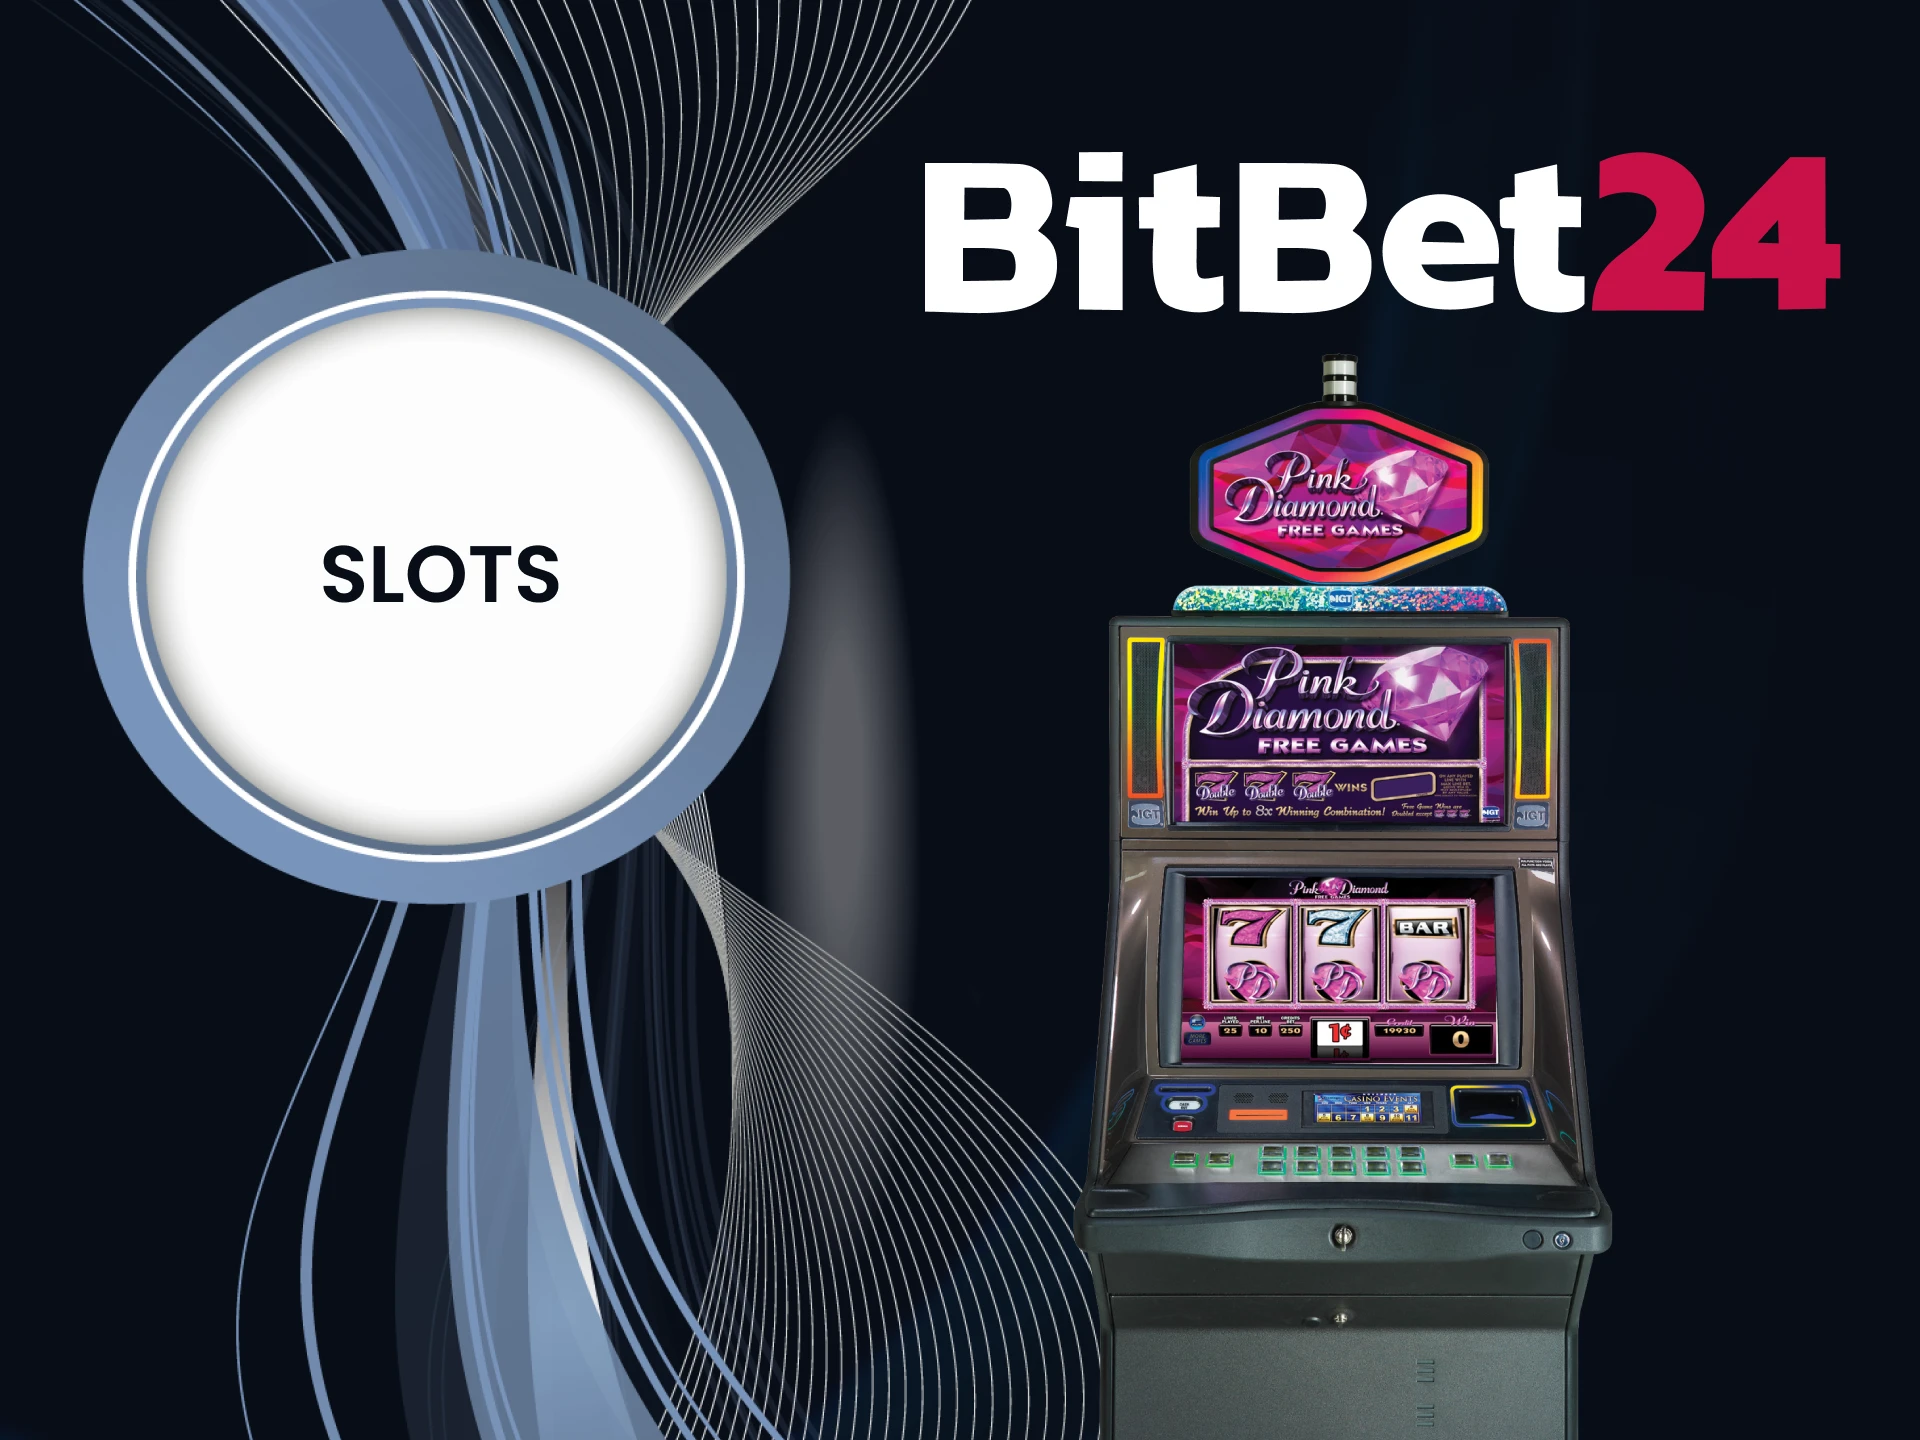 At BitBet24 bet on slots machines.